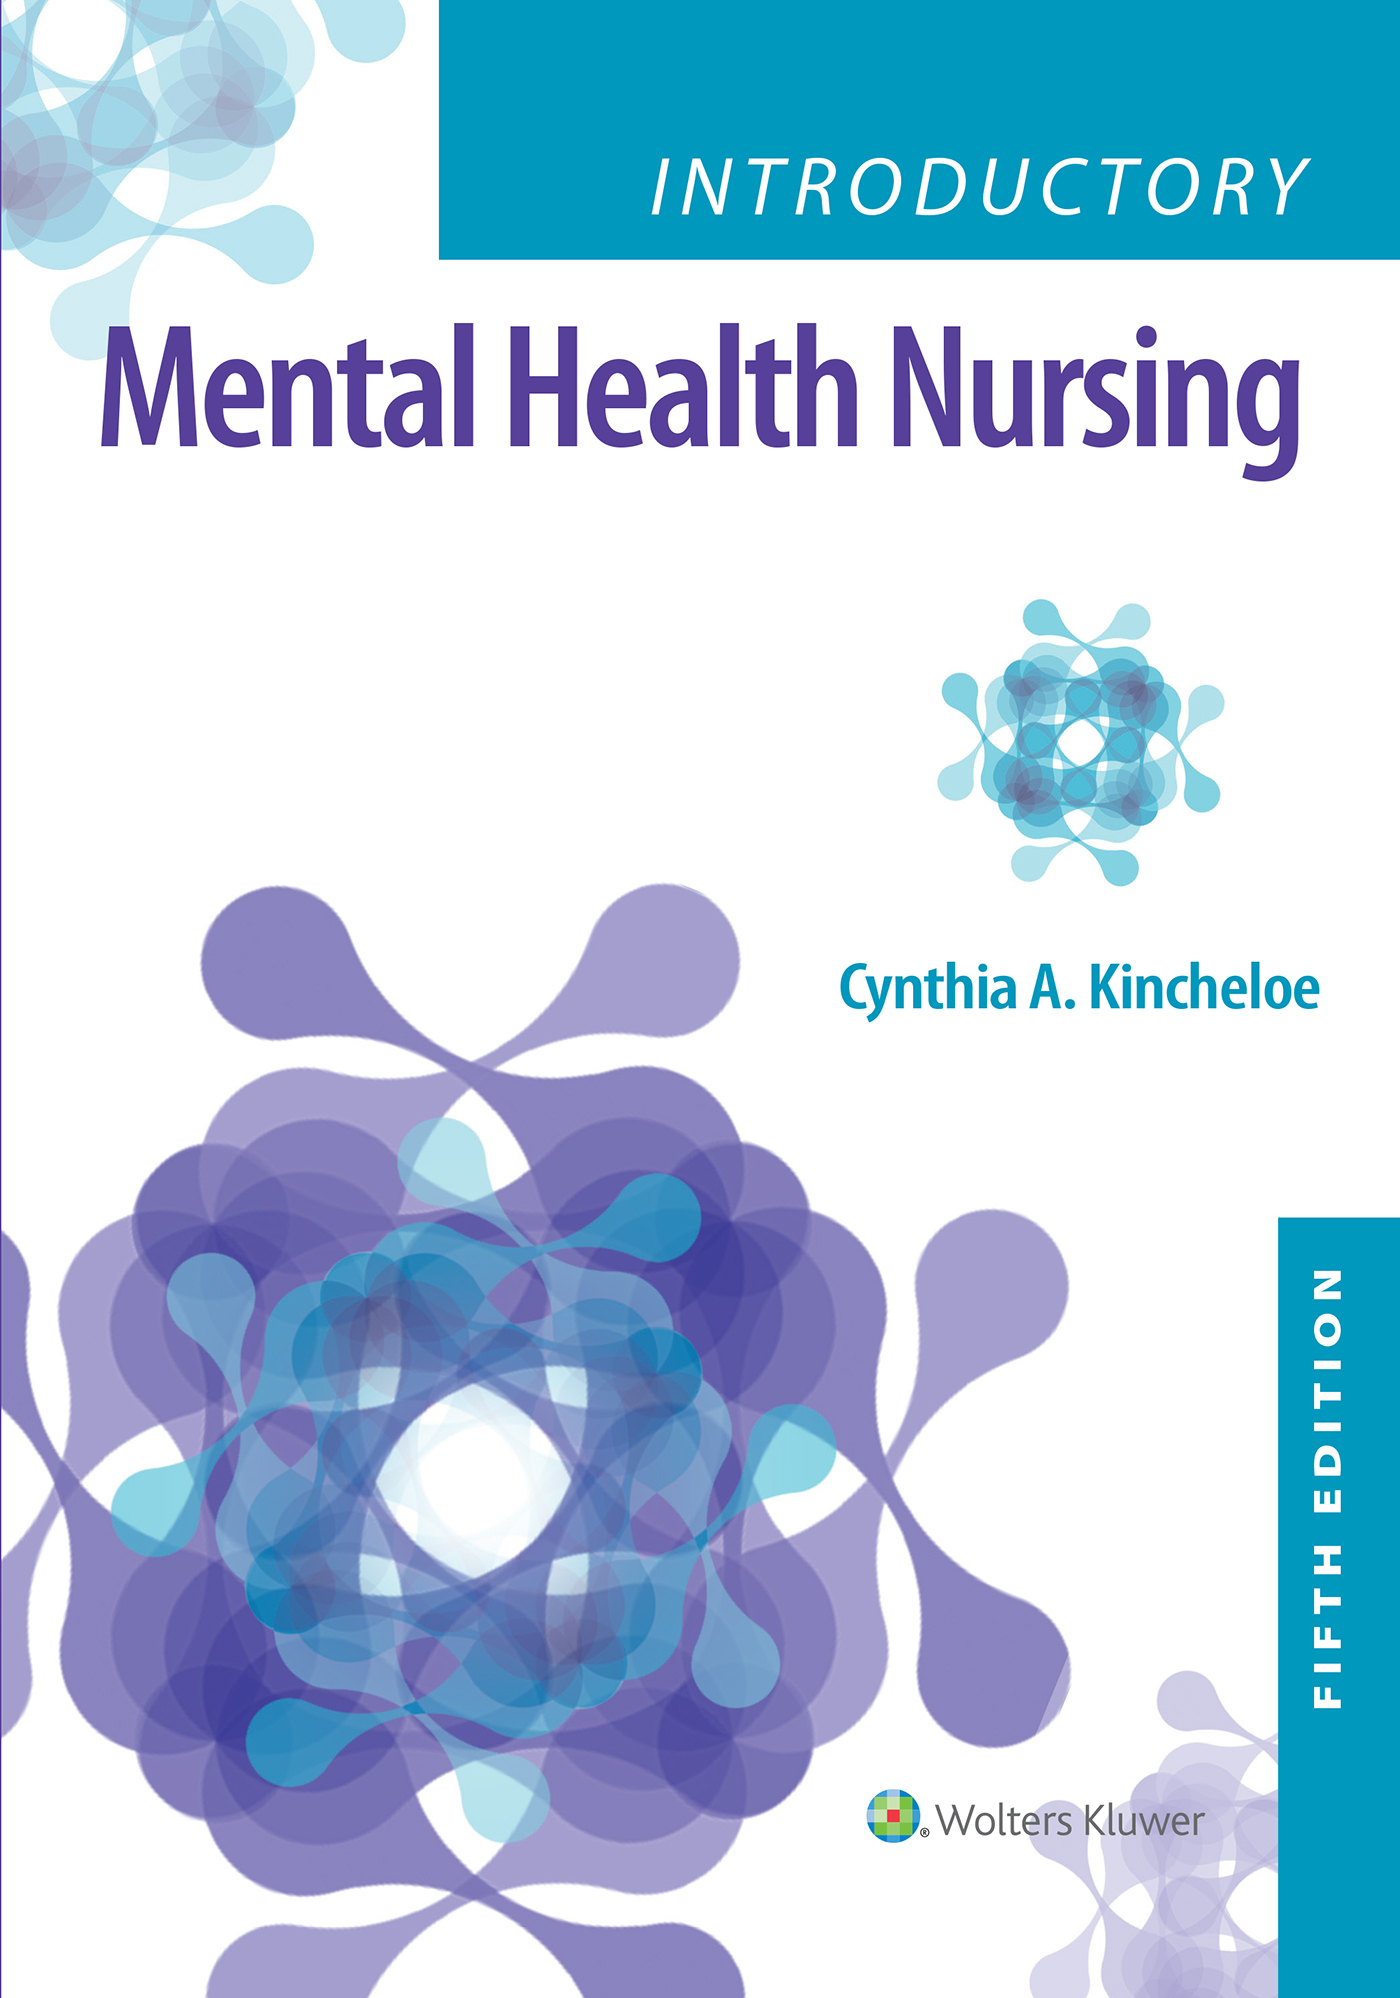 Introductory Mental Health Nursing, 5th Edition